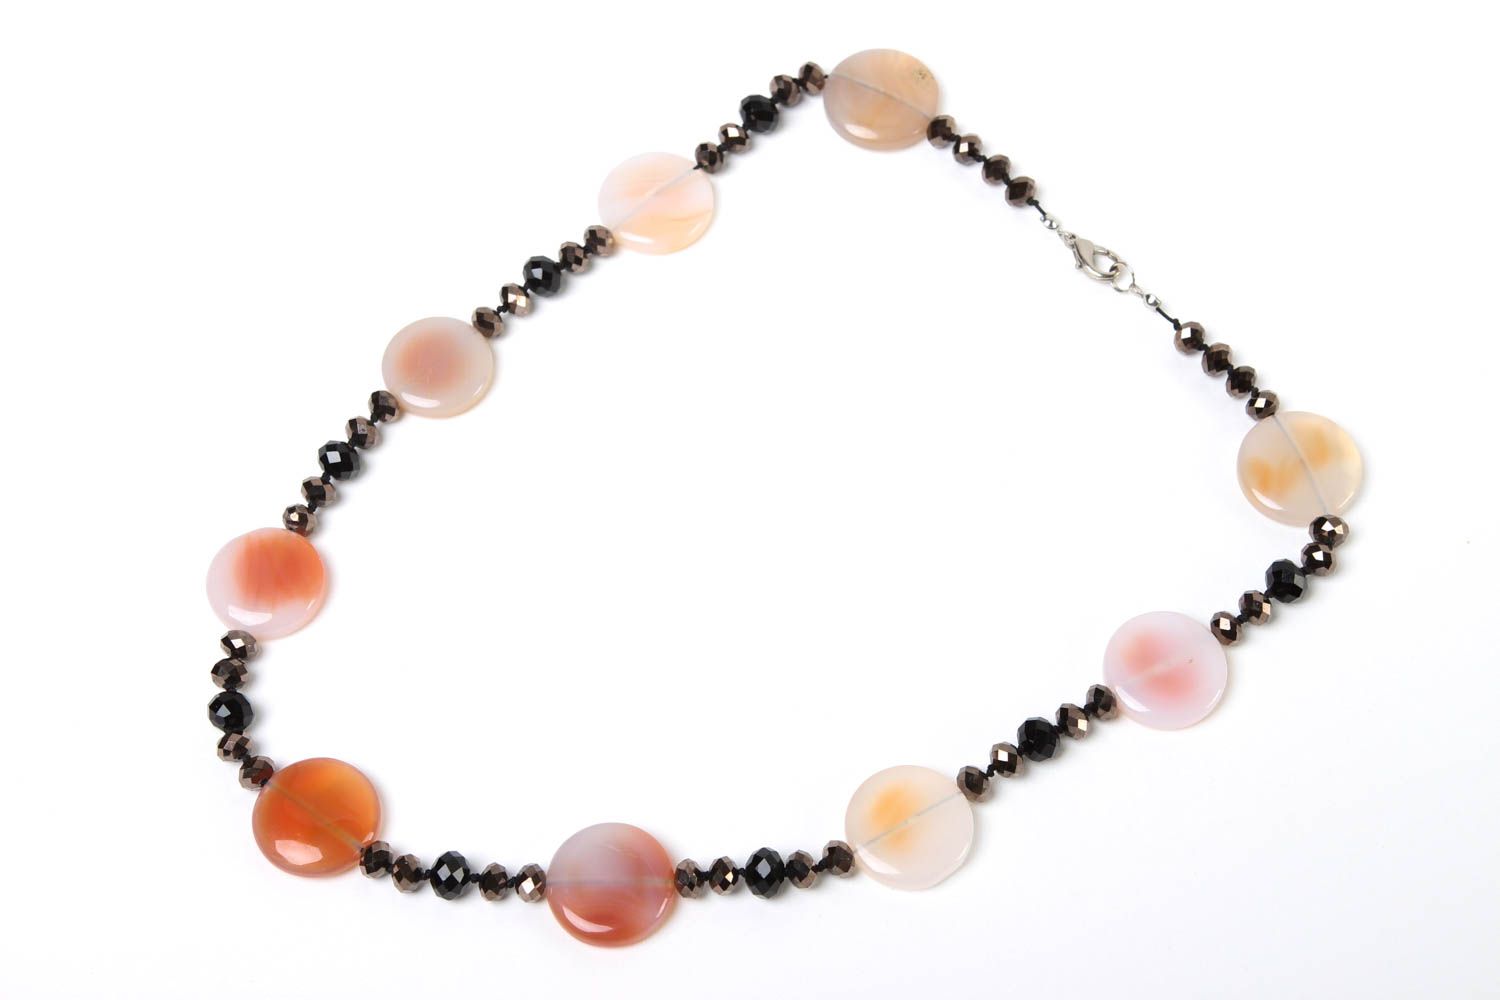 Handmade necklace bead necklace gemstone jewelry designer accessories gift ideas photo 2